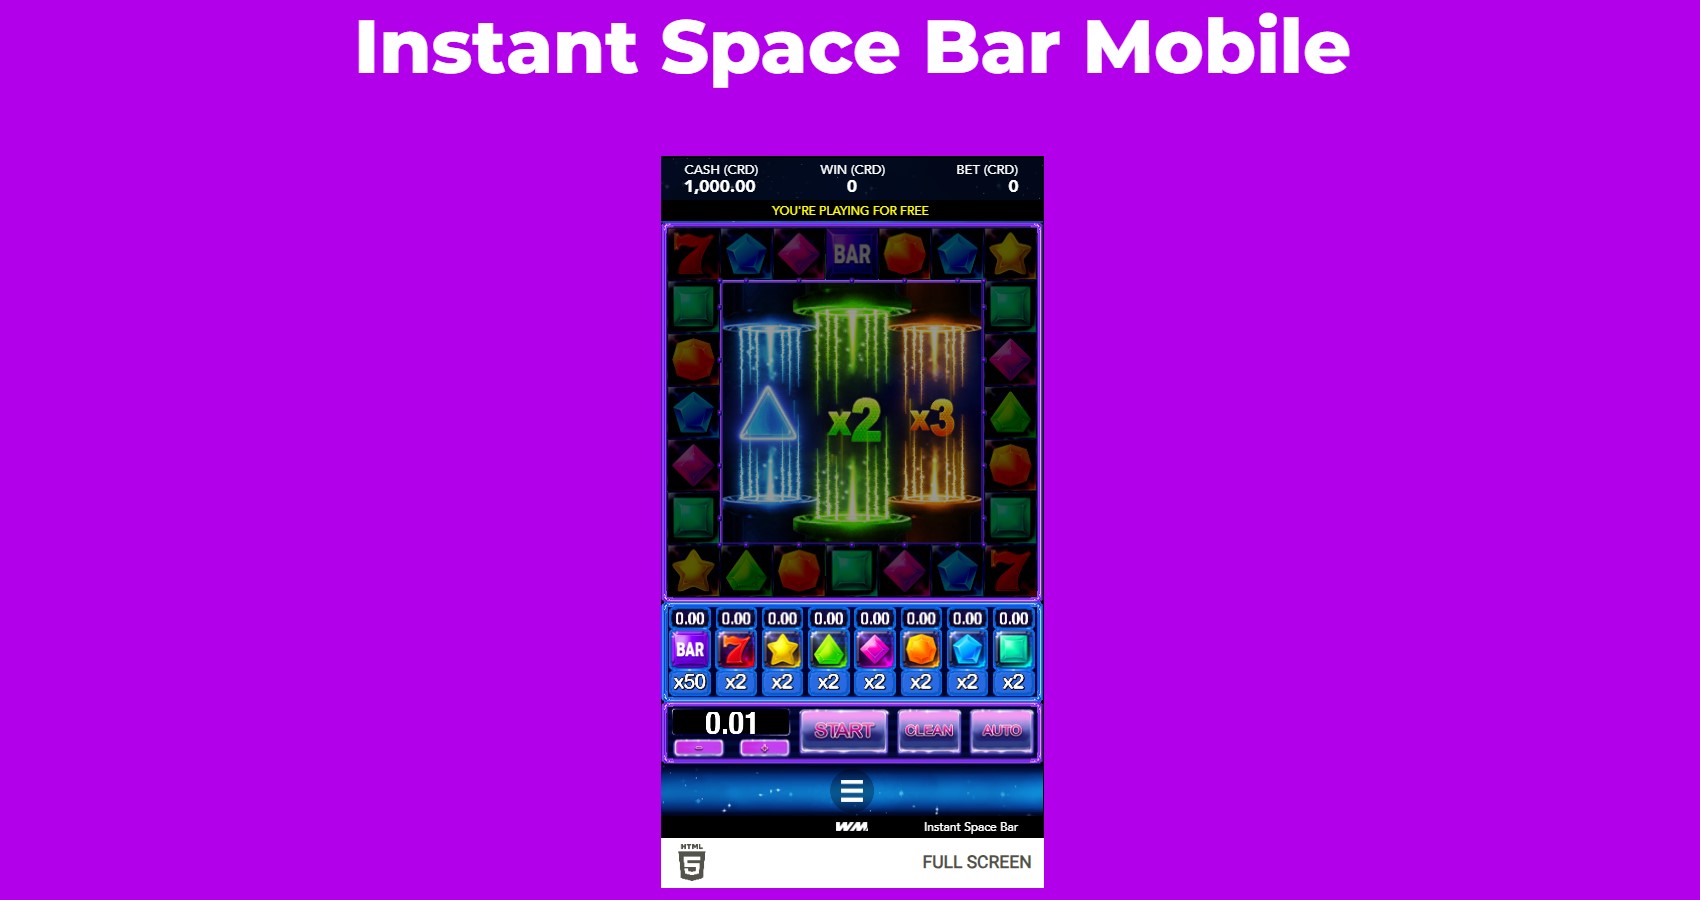 Instant Space Bar મોબાઇલ સંસ્કરણ